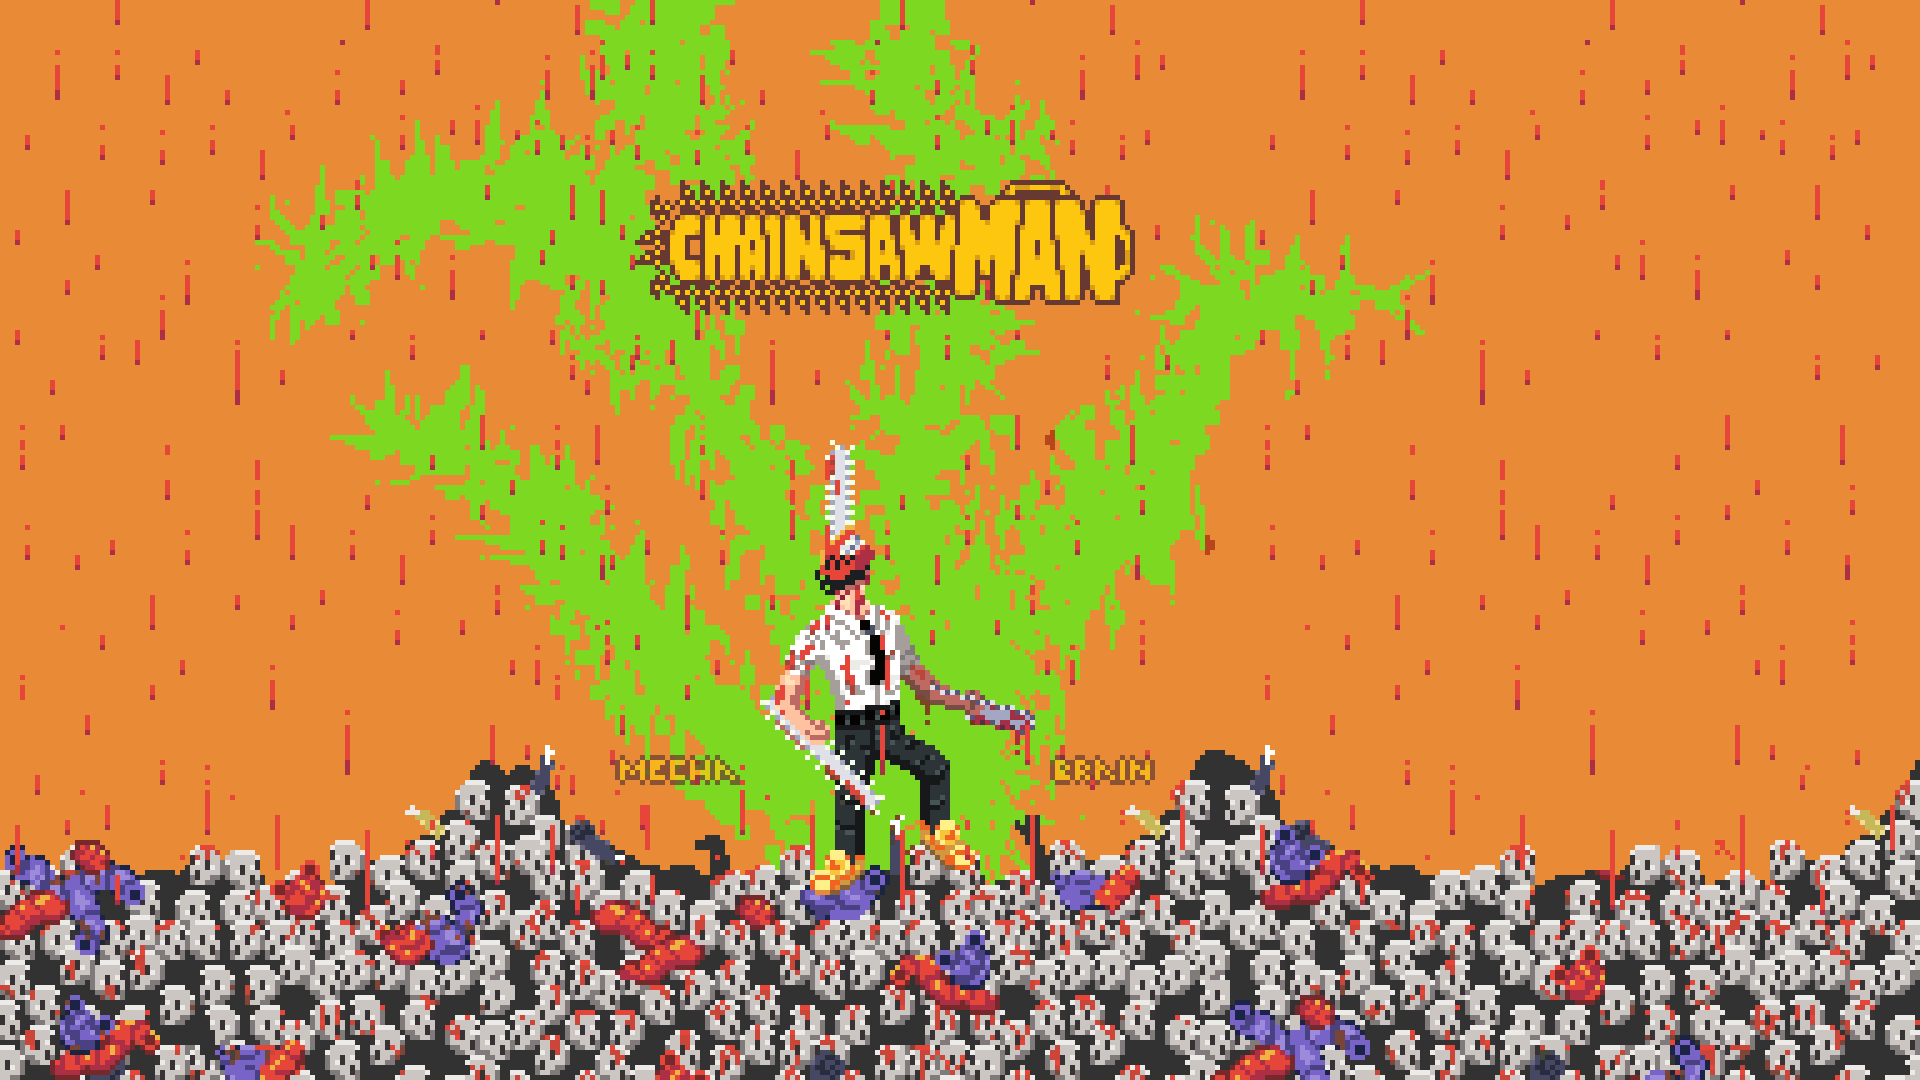 Chainsaw Man Wallpaper Bundle (Desktop & Phone) Brain's Ko Fi Shop Fi ❤️ Where Creators Get Support From Fans Through Donations, Memberships, Shop Sales And More! The Original 'Buy Me